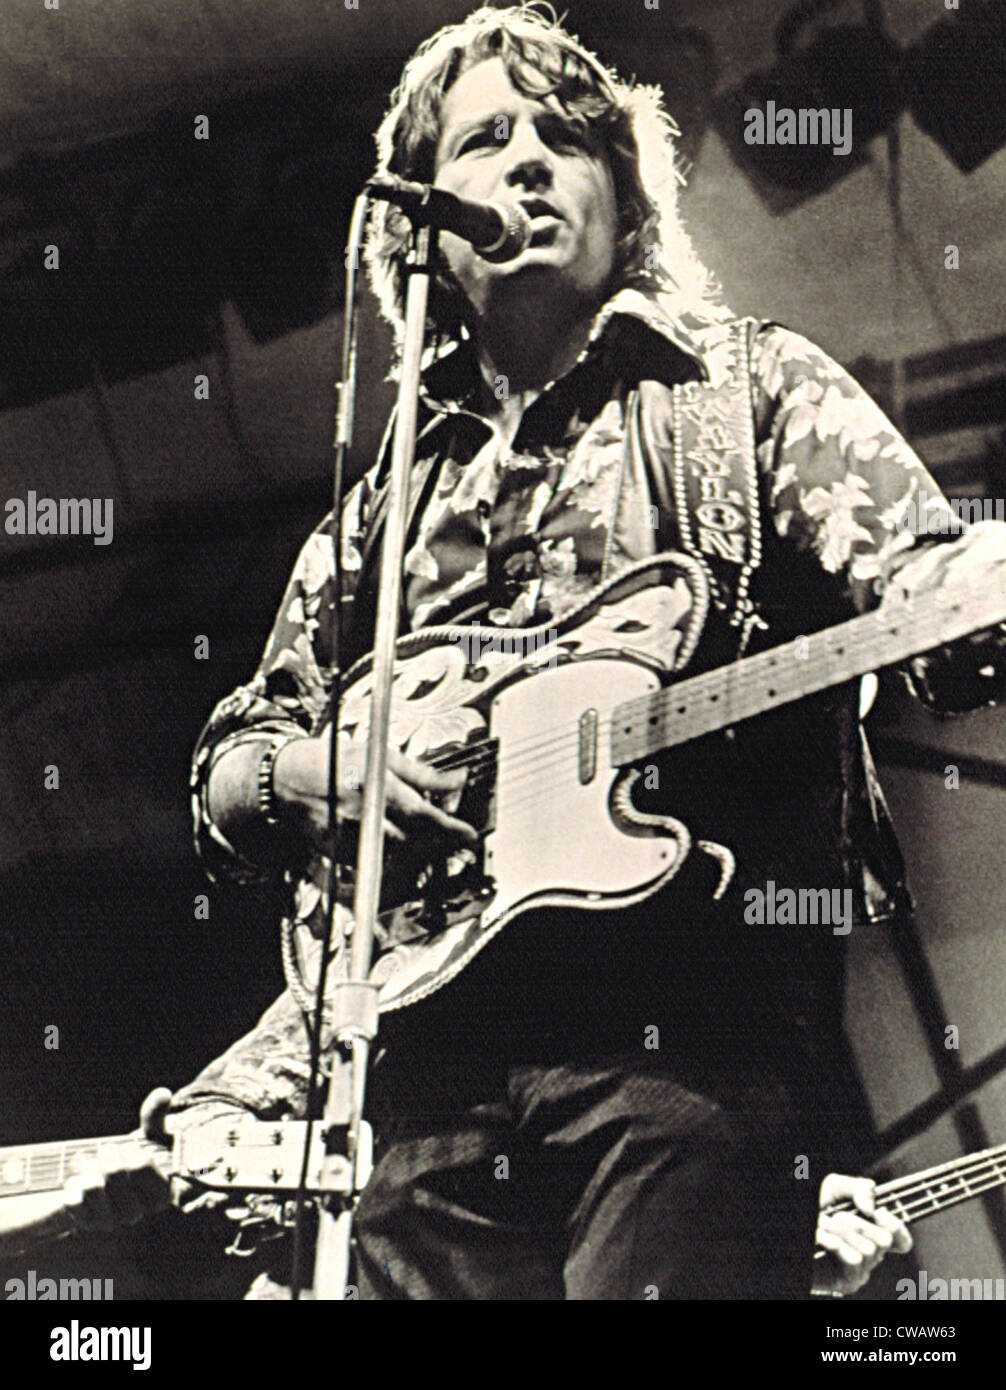 WAYLON JENNINGS in Konzert, c. 1974. Höflichkeit: CSU Archive / Everett Collection Stockfoto